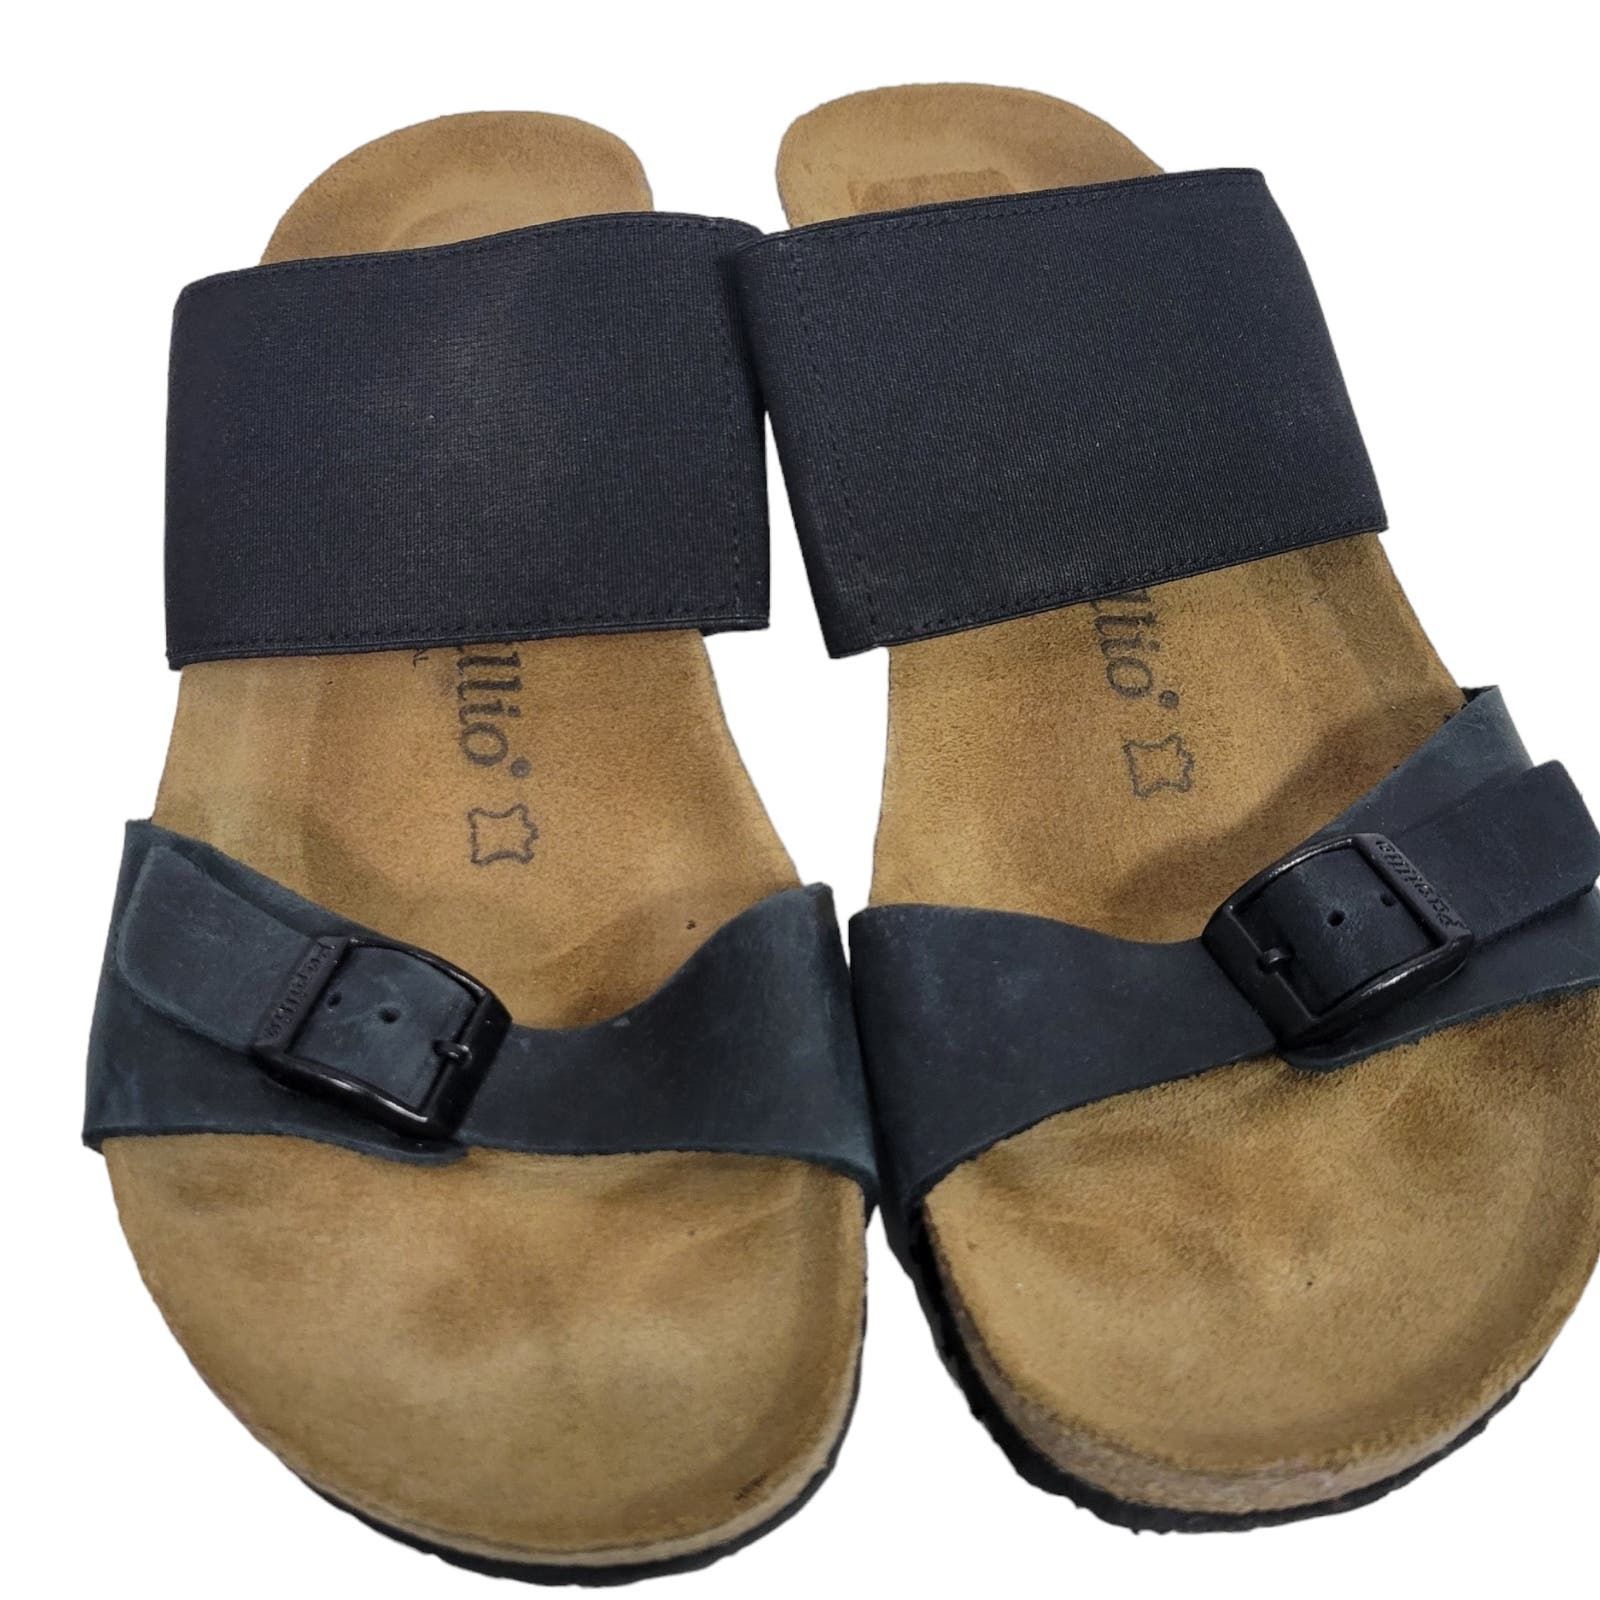 Birkenstock Papillio Della Wedge Black Oiled Nubuck Sandals Birko Slides Size 41 10